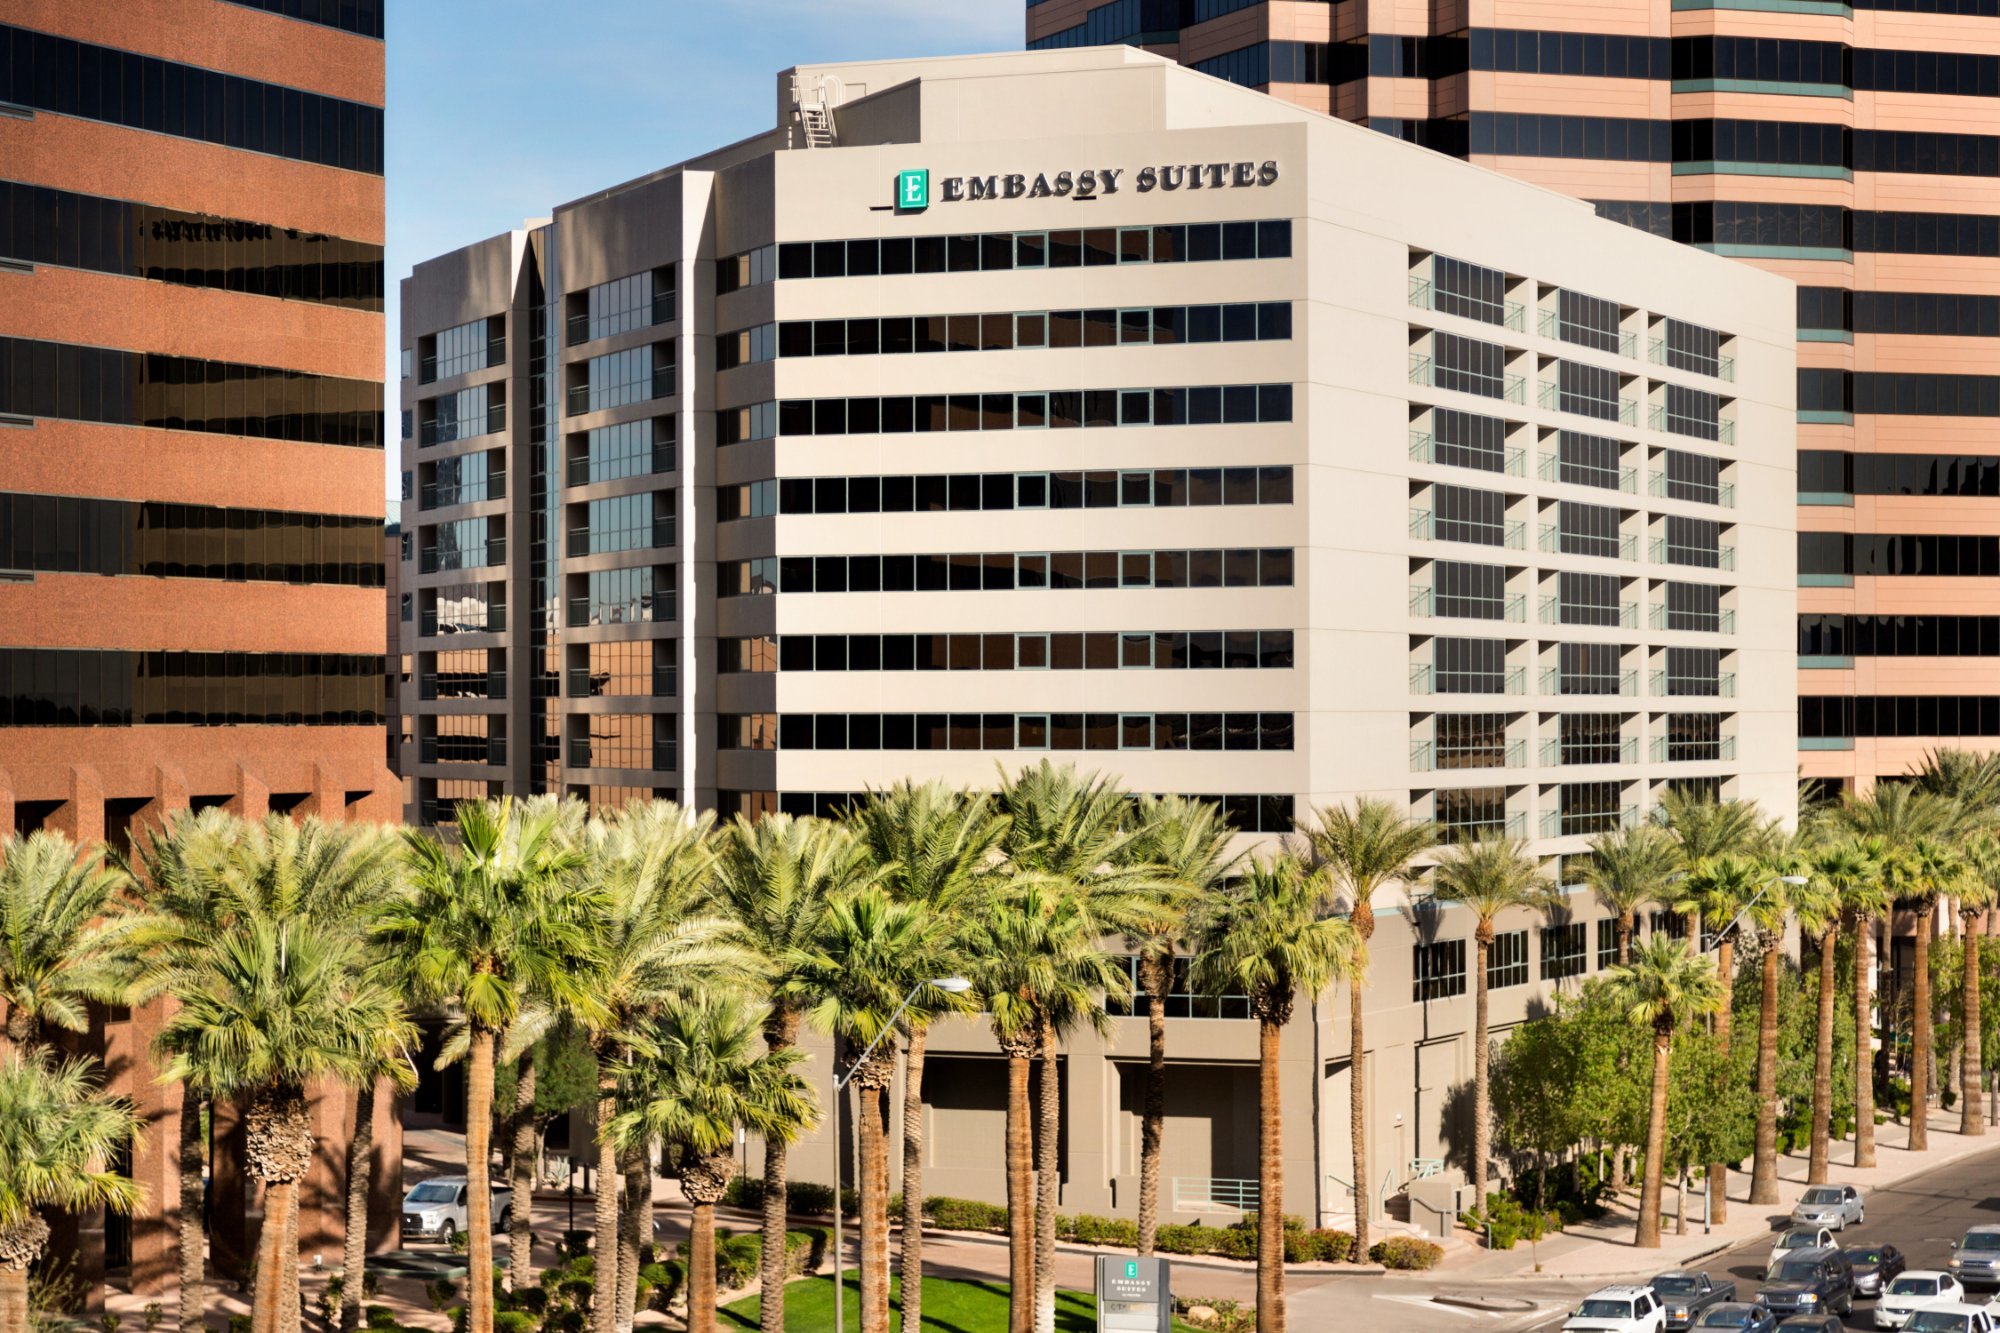 Photo of Embassy Suites Phoenix Downtown North, Phoenix, AZ